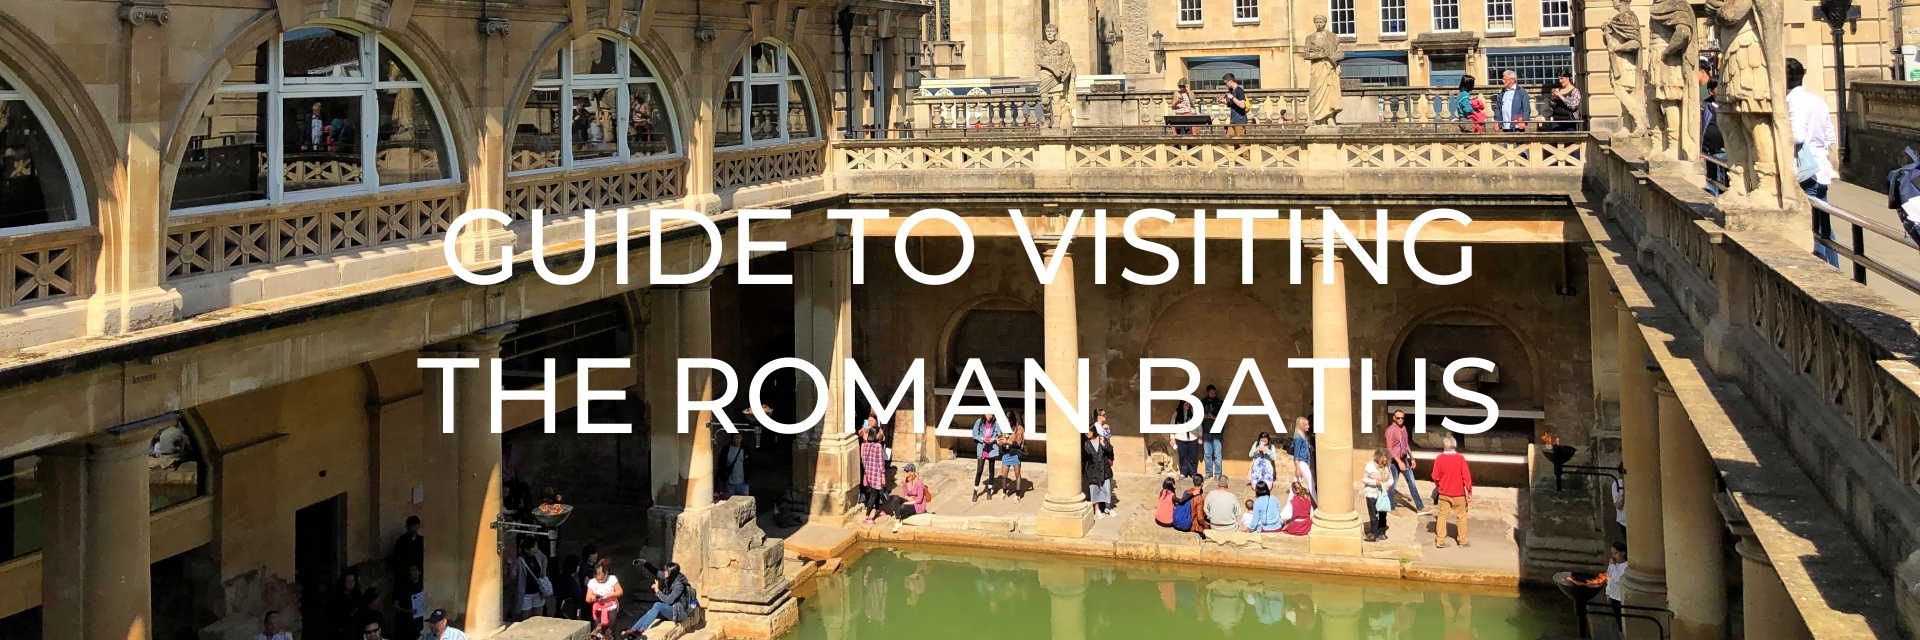 Guide to Visiting The Roman Baths Desktop Image